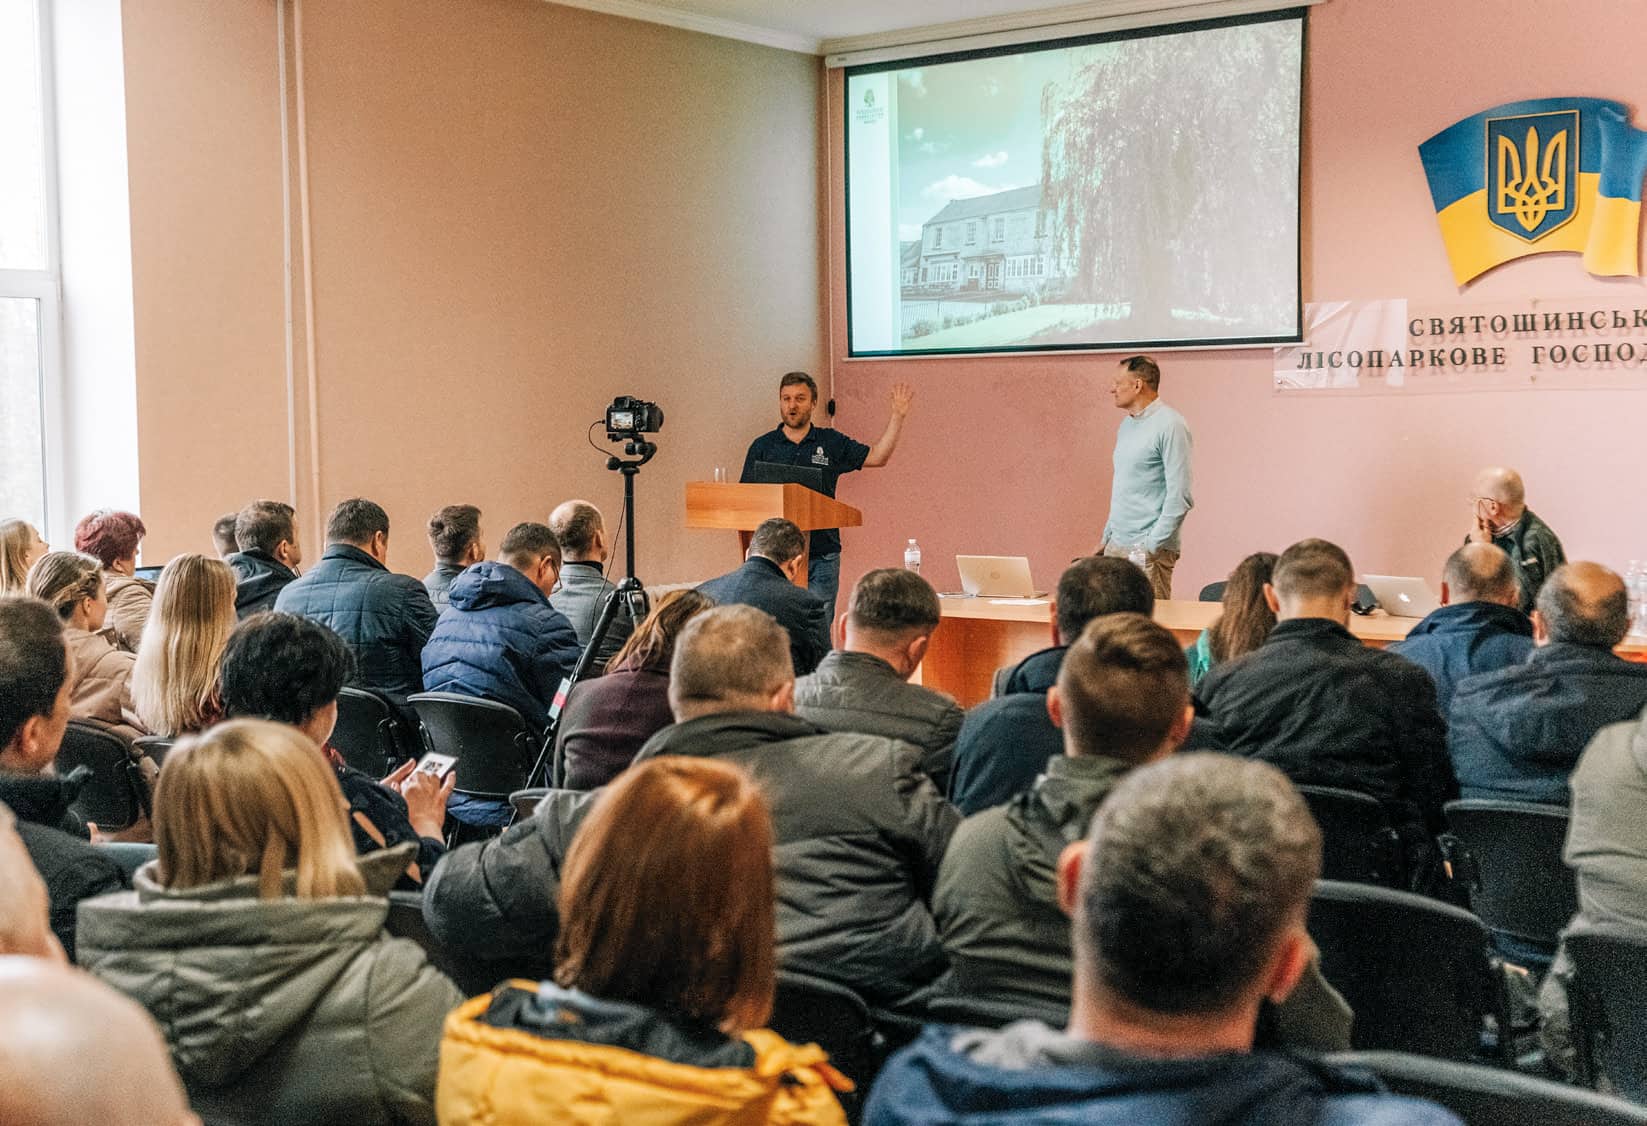 John Parker presenting in Kyiv.